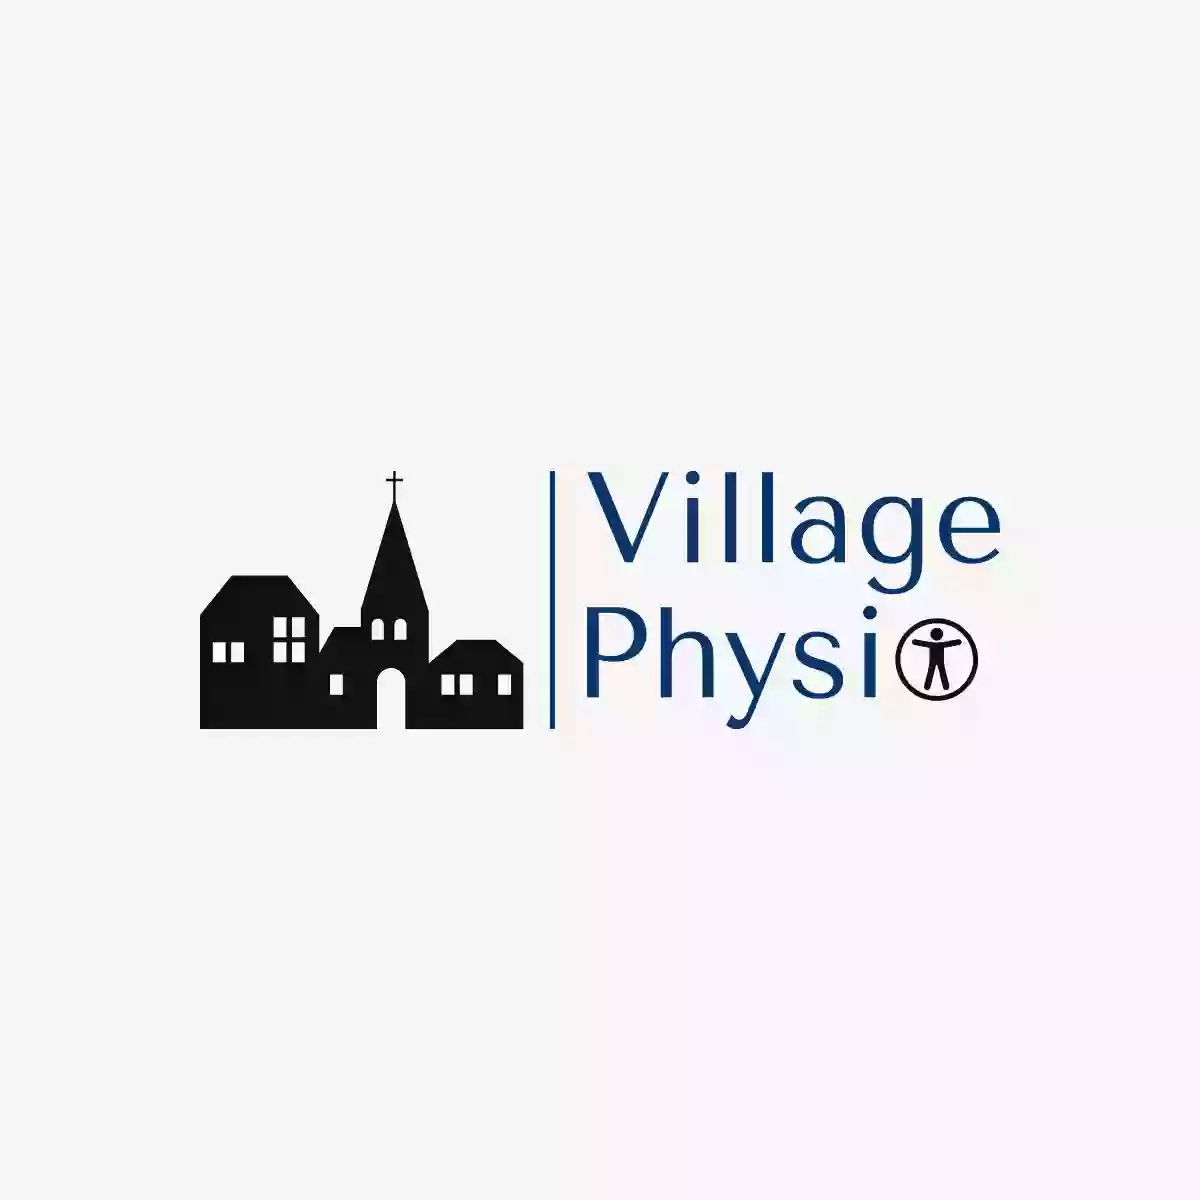 Village Physio